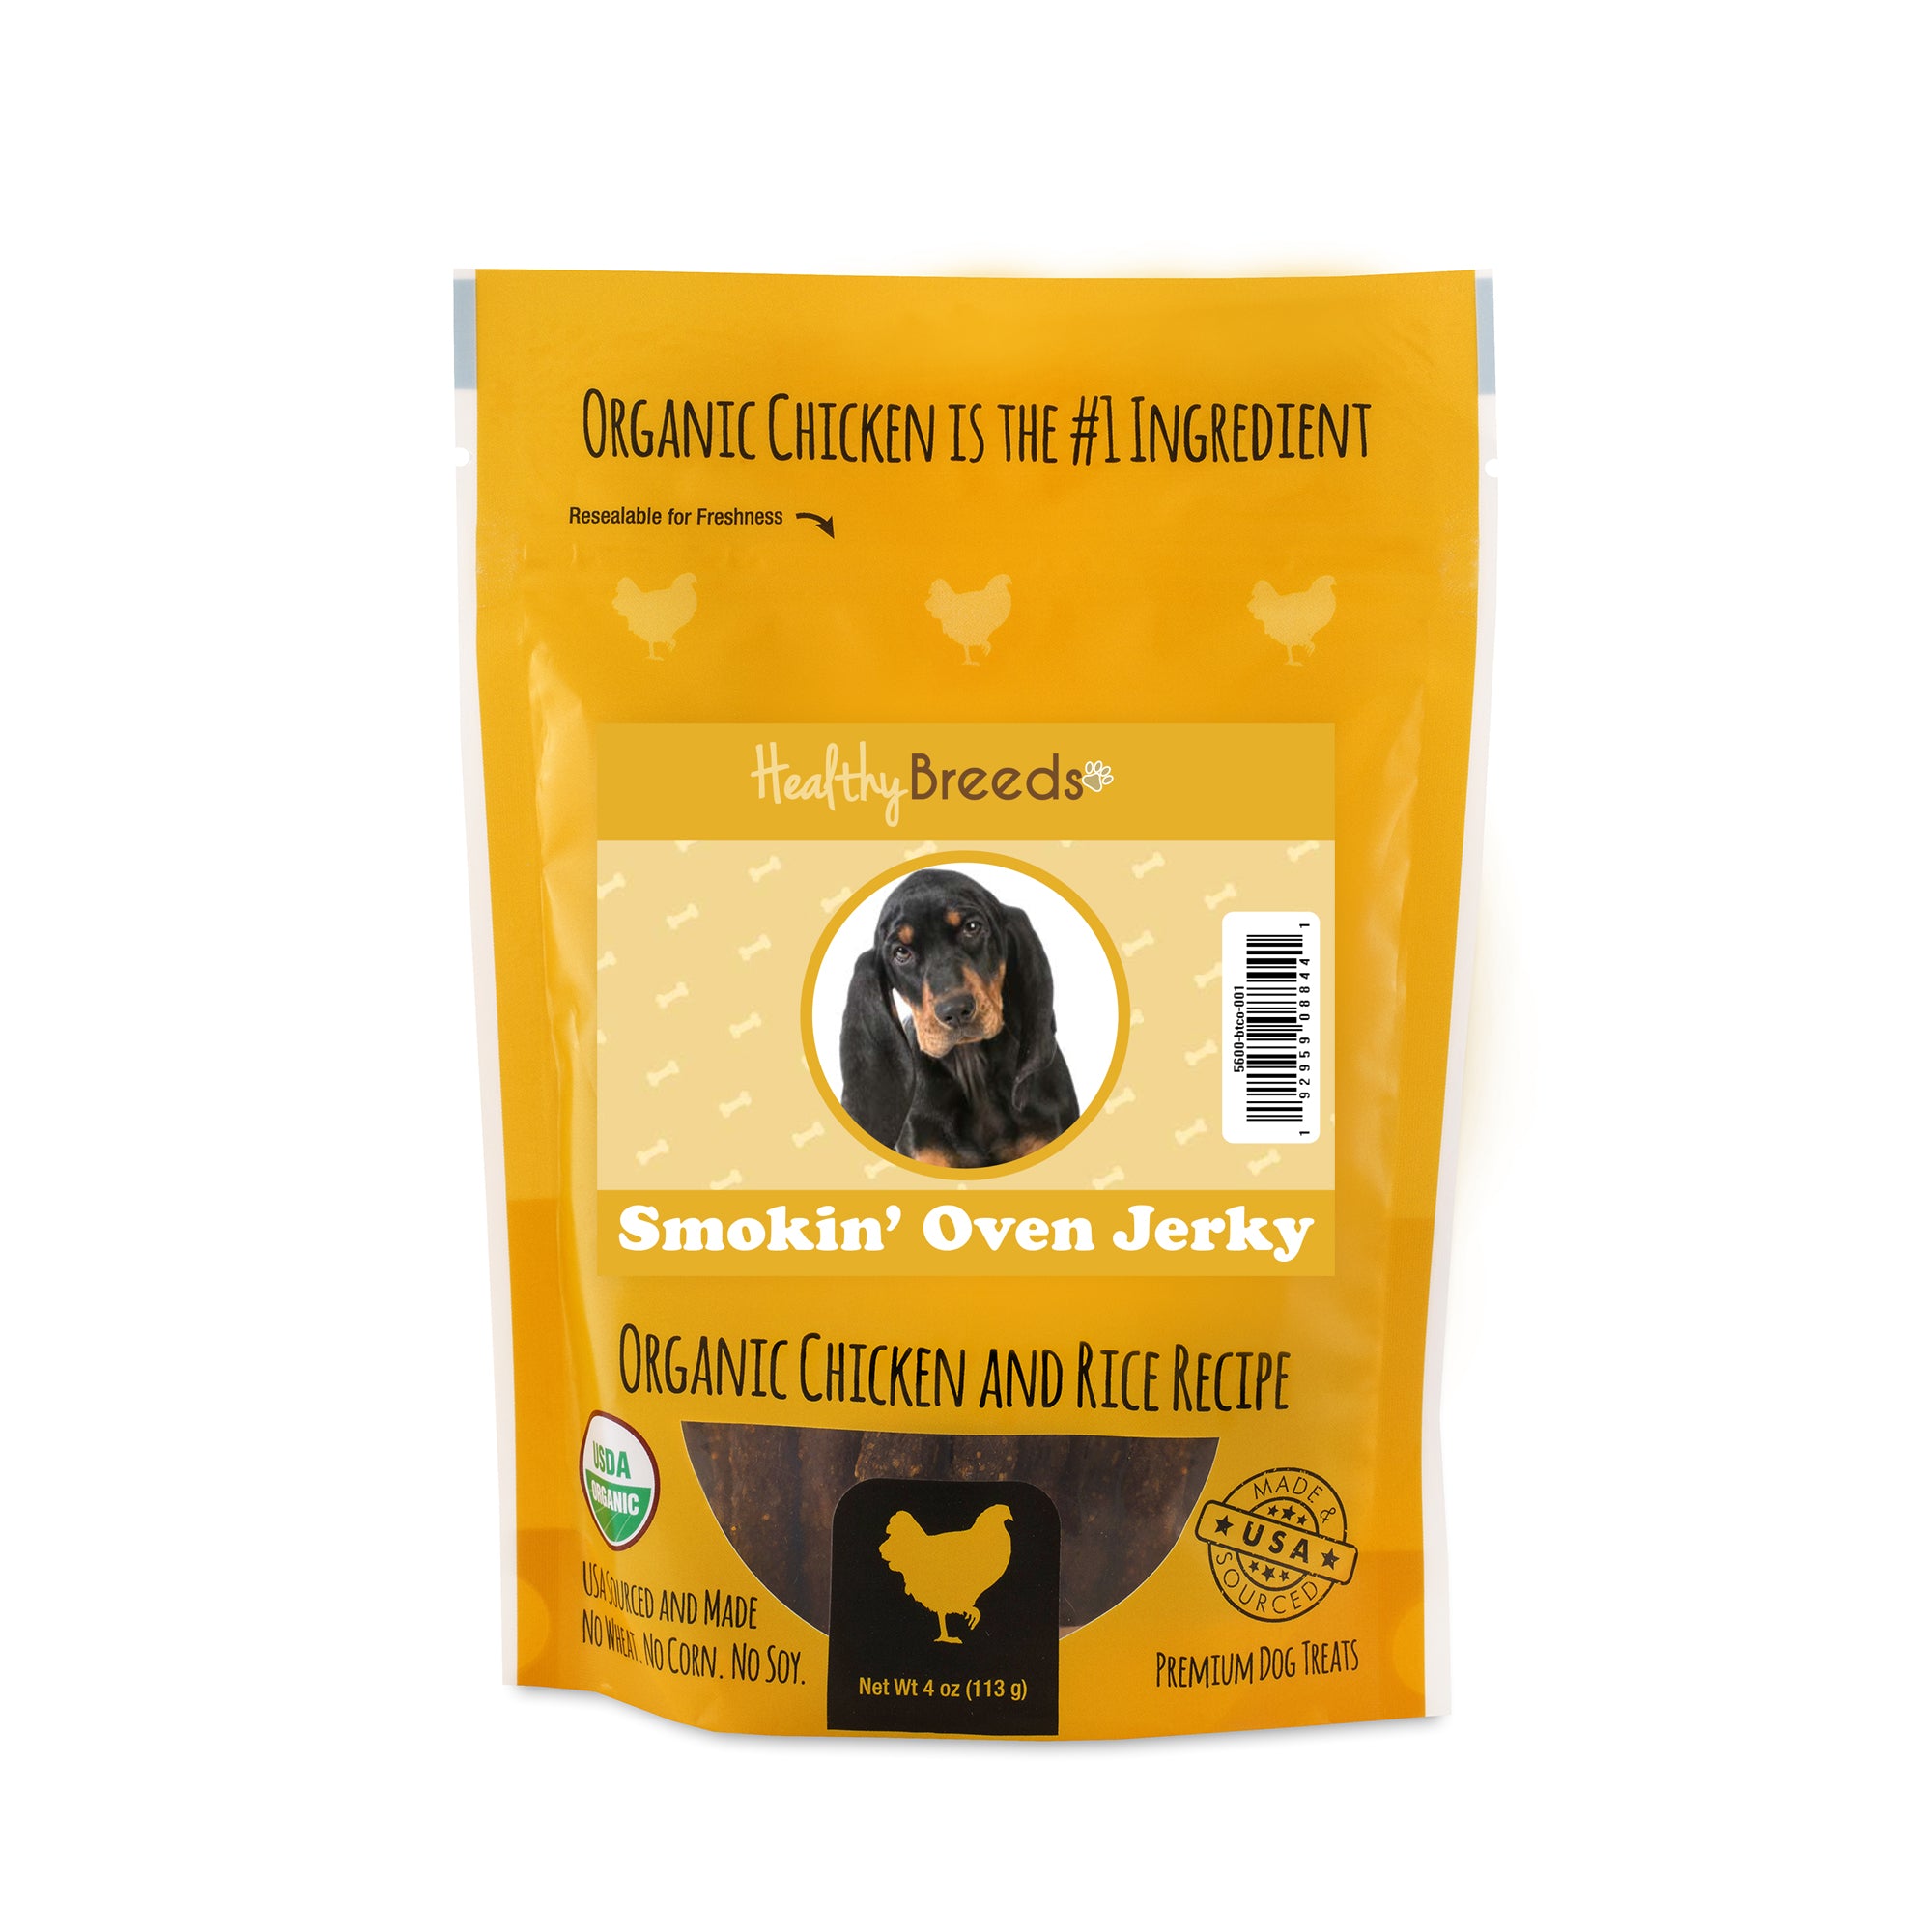 Black and Tan Coonhound Smokin' Oven Organic Chicken & Rice Recipe Jerky Dog Treats 4